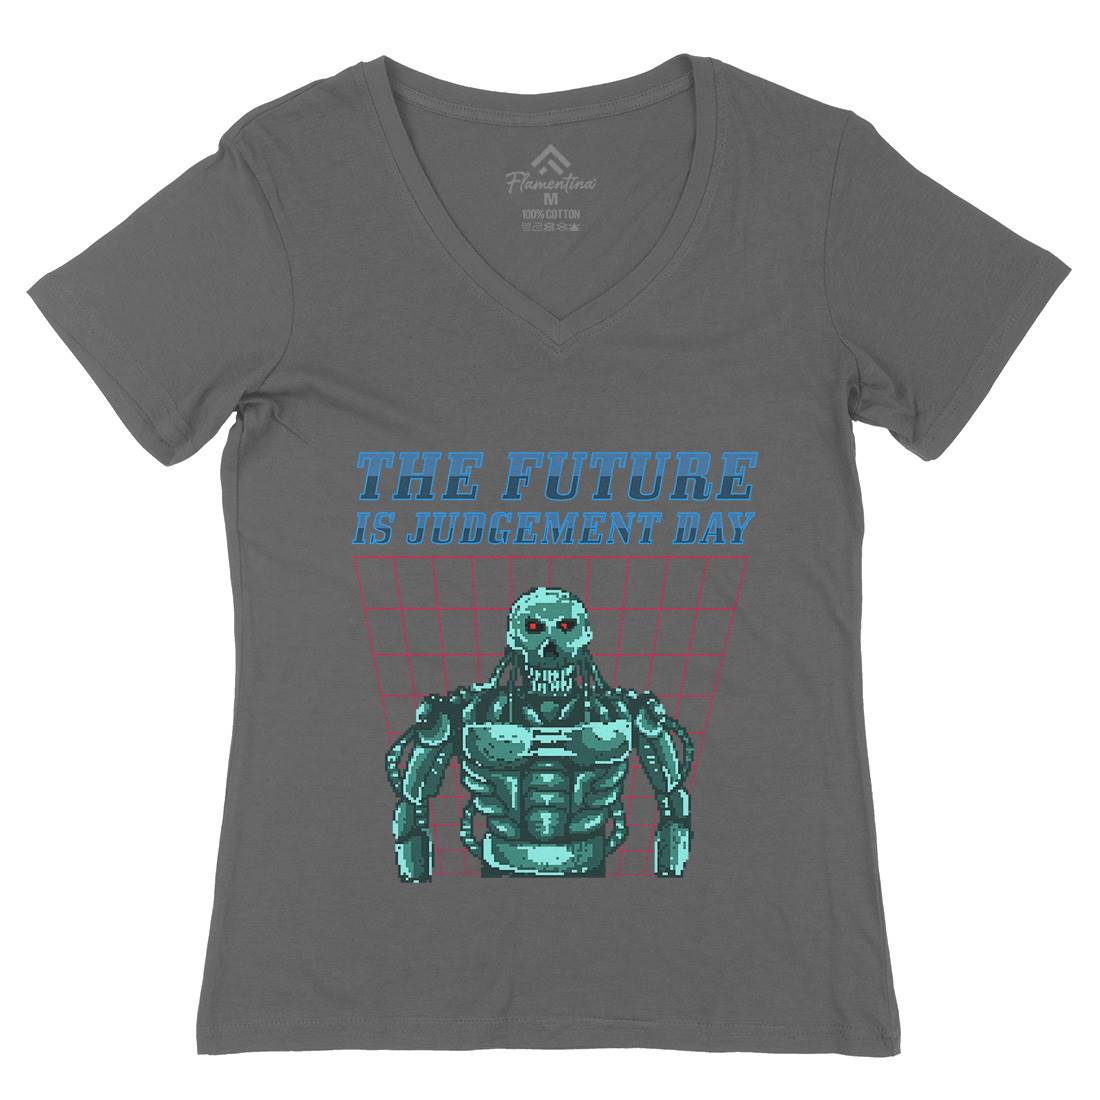 The Future Is Judgement Day Womens Organic V-Neck T-Shirt Horror B968